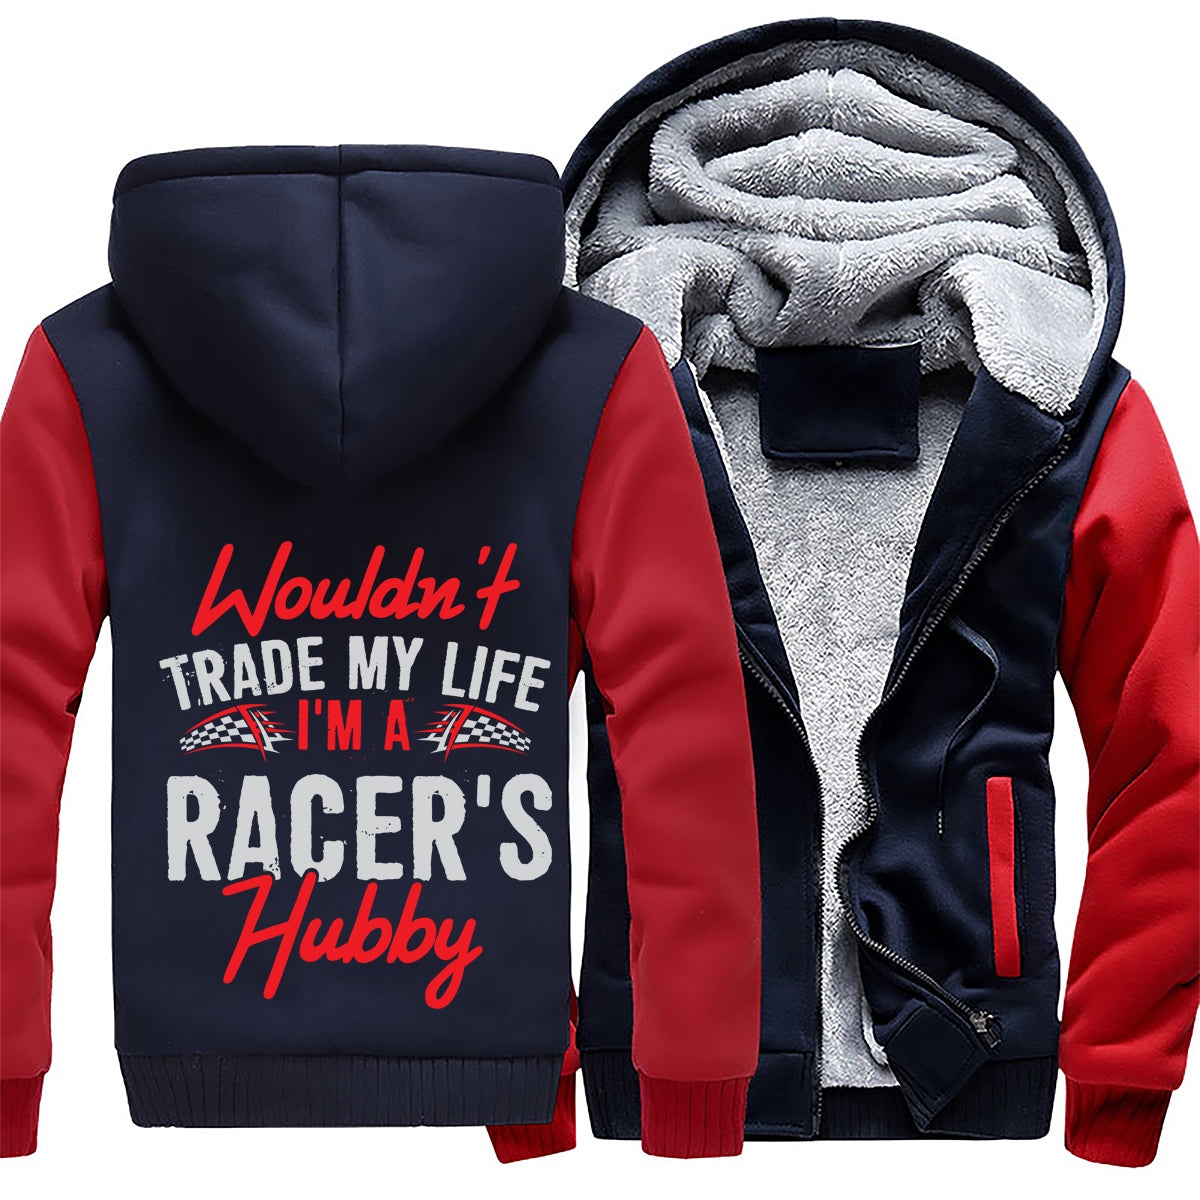 I'm A Racer's Hubby Jacket 